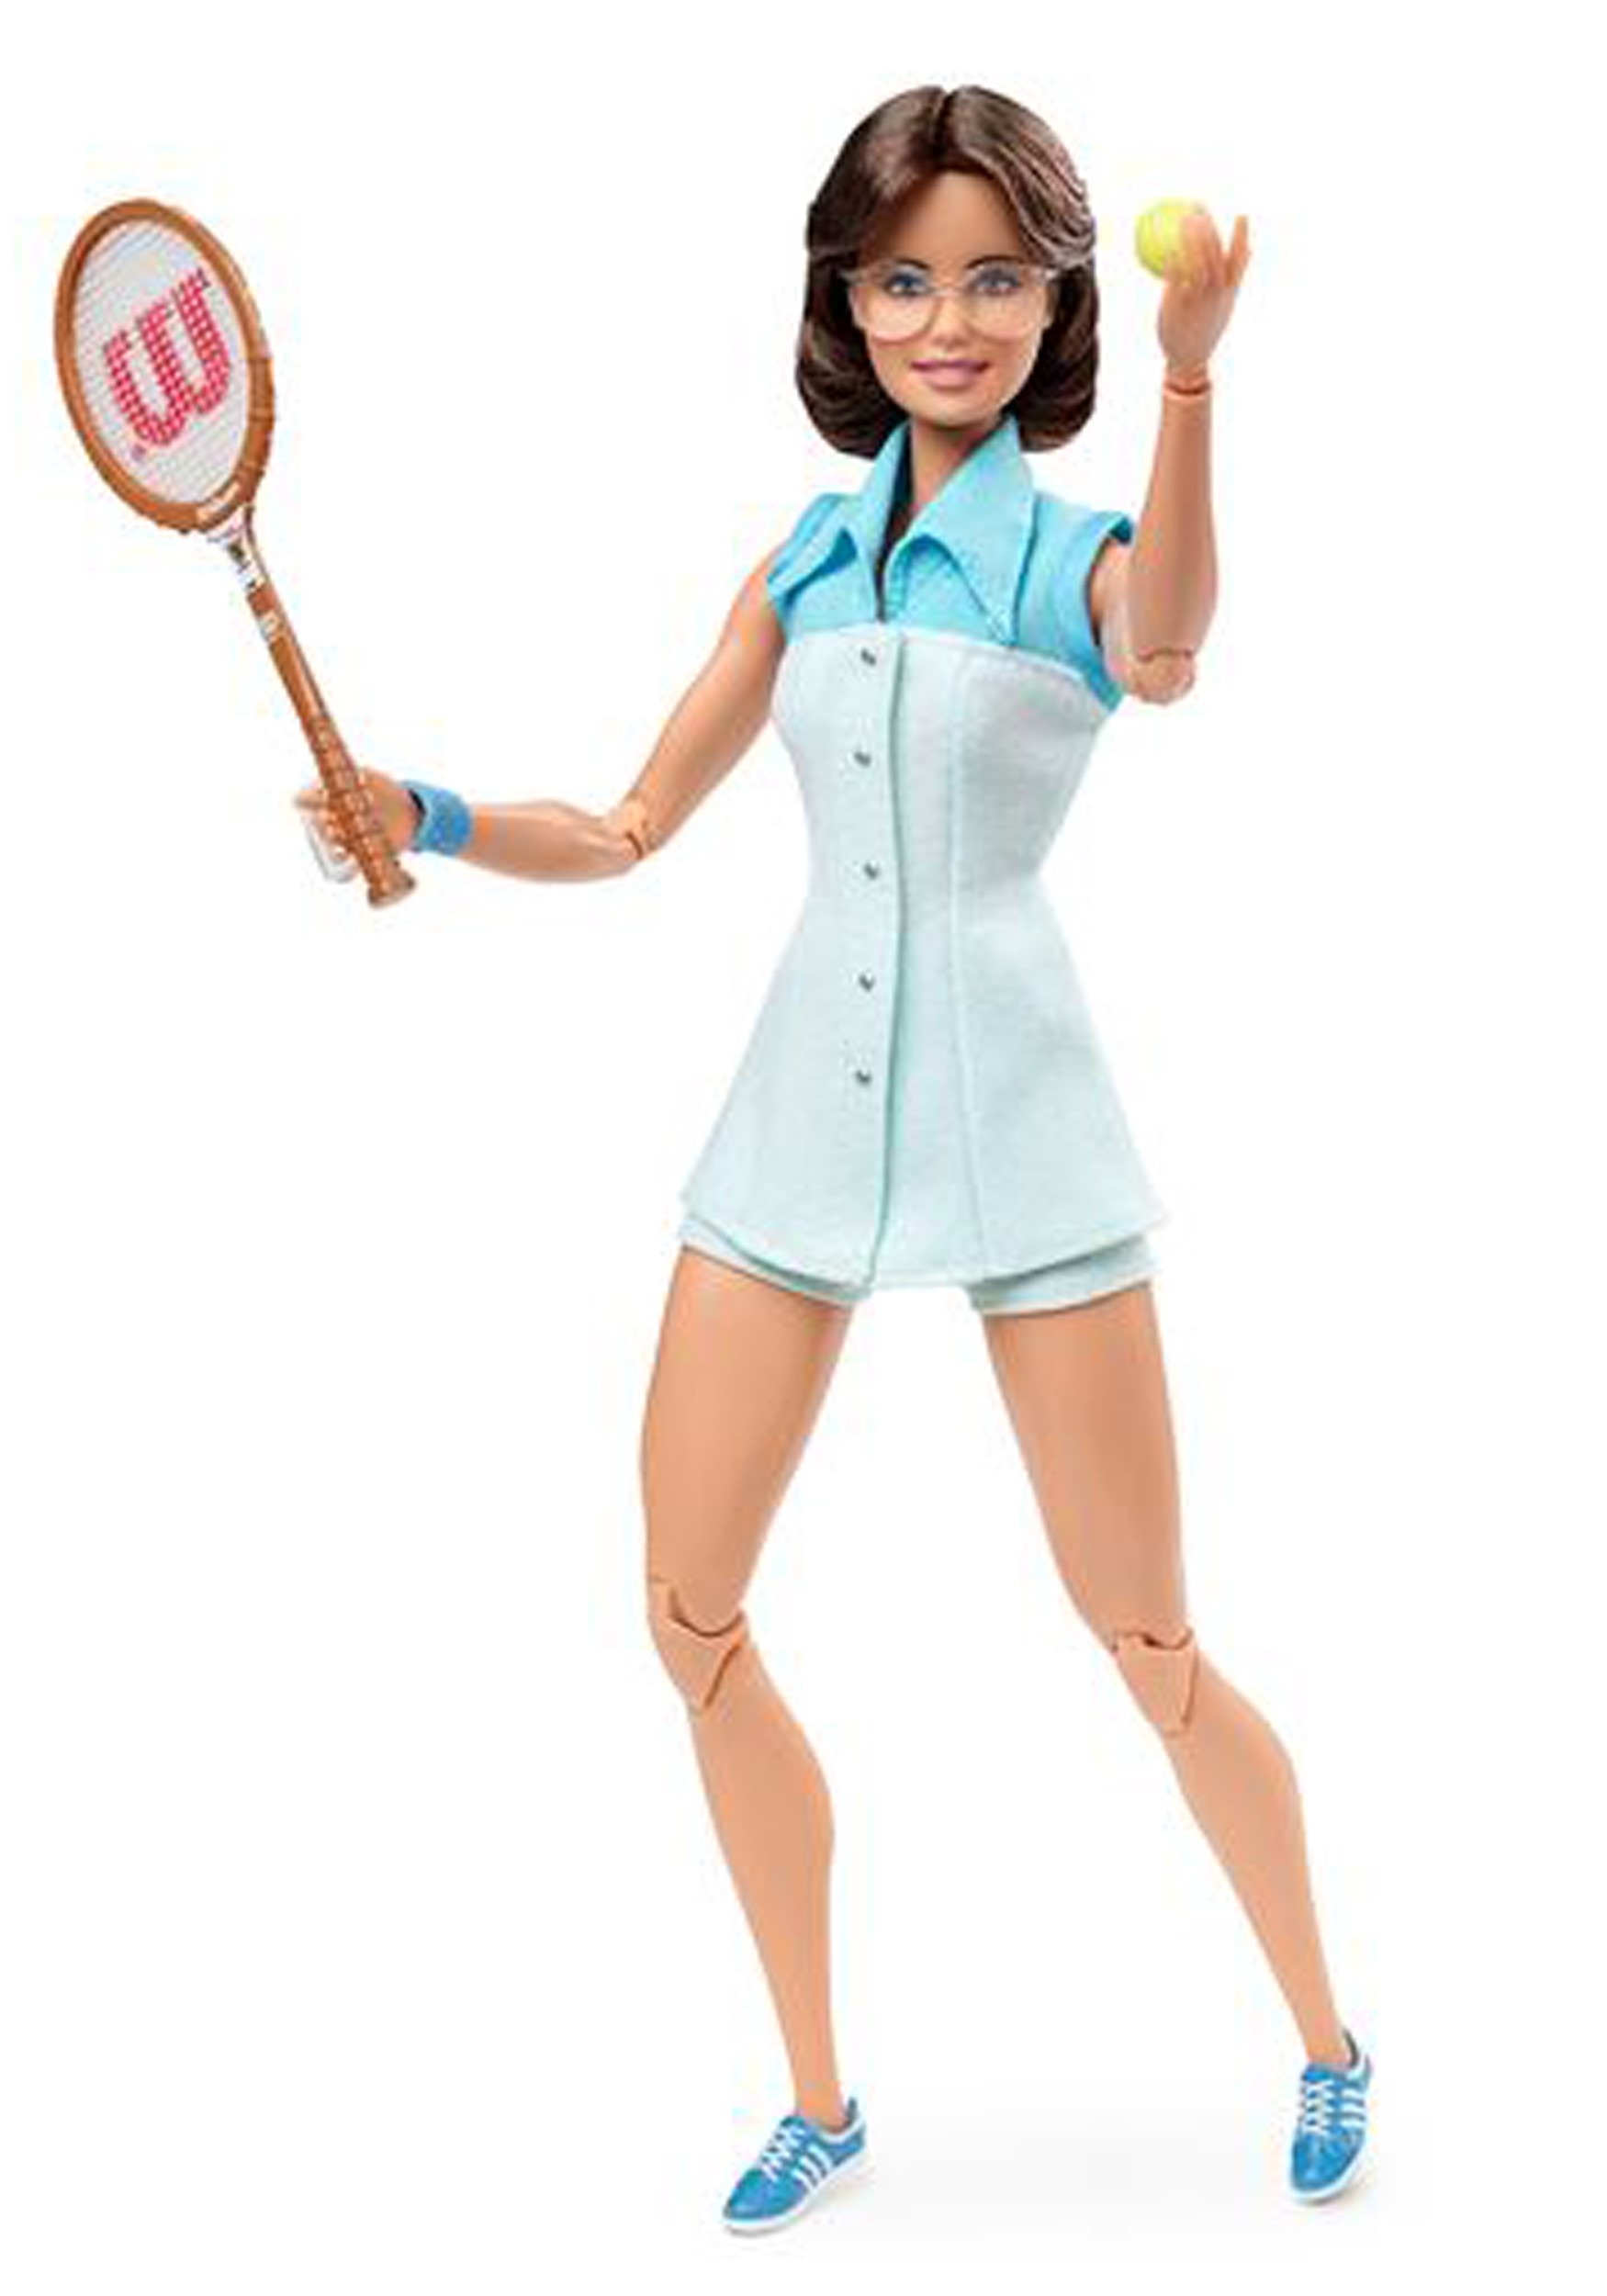 Barbie Inspiring Women Billie Jean King Tennis Doll